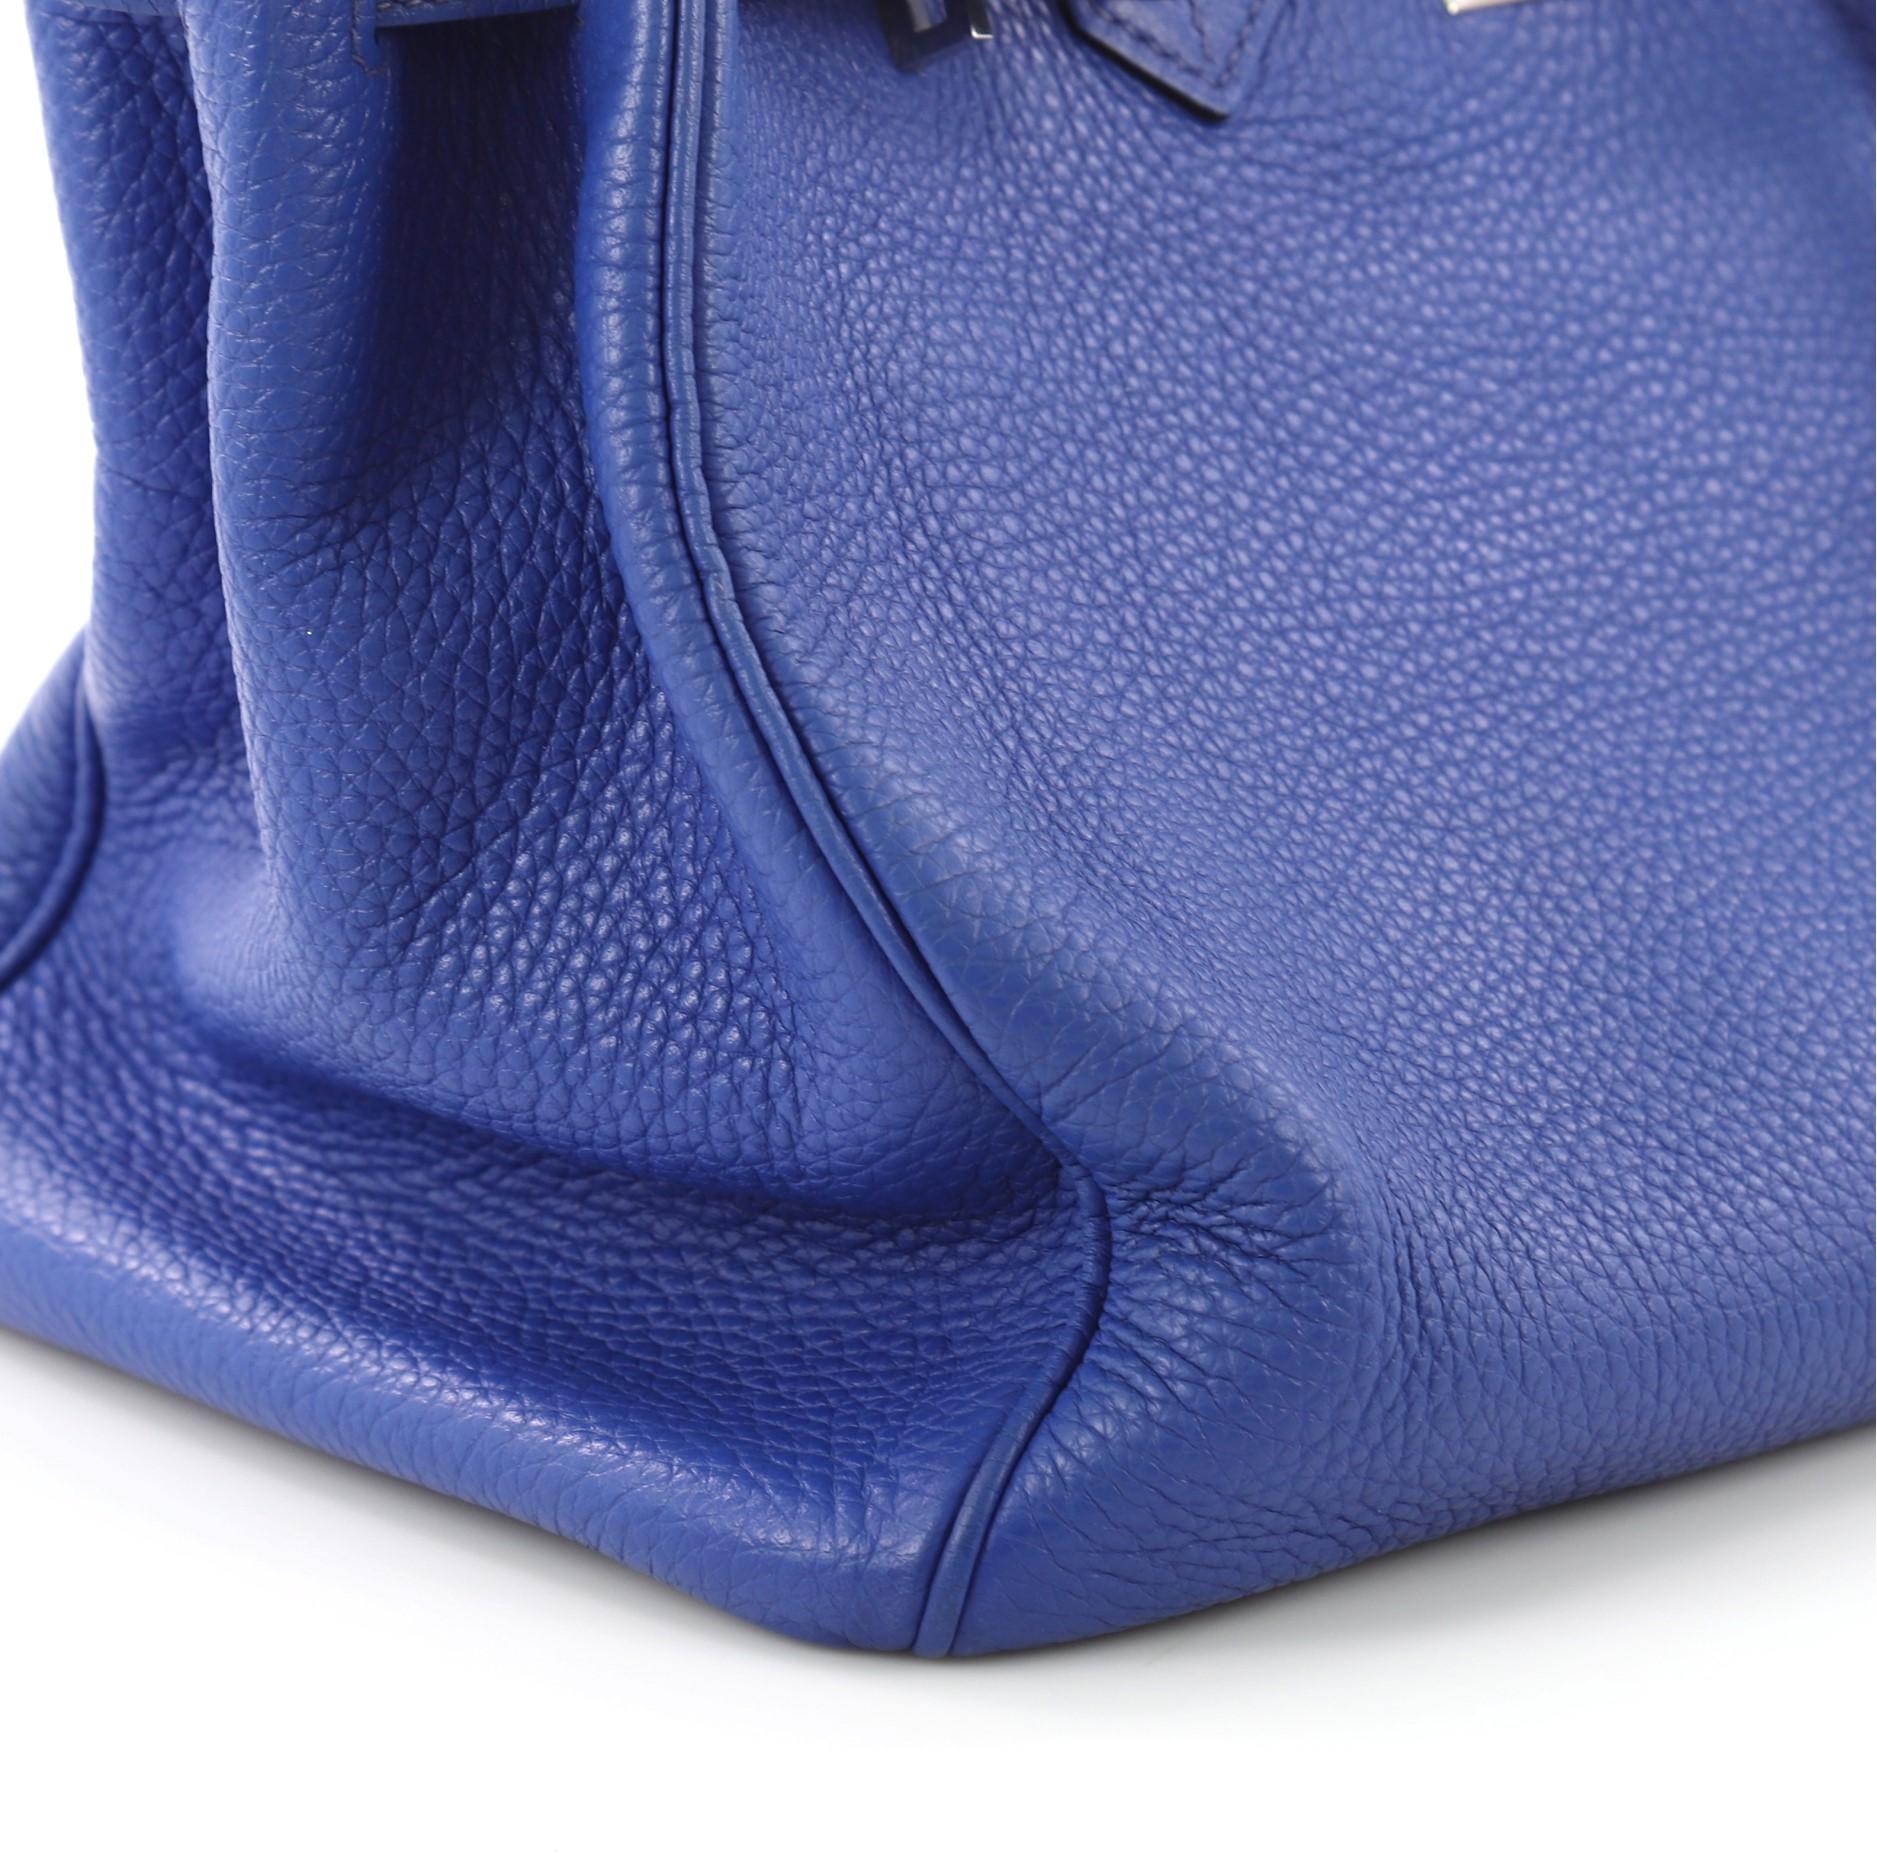 Hermes Birkin Handbag Blue Electrique Clemence with Palladium Hardware 35 2